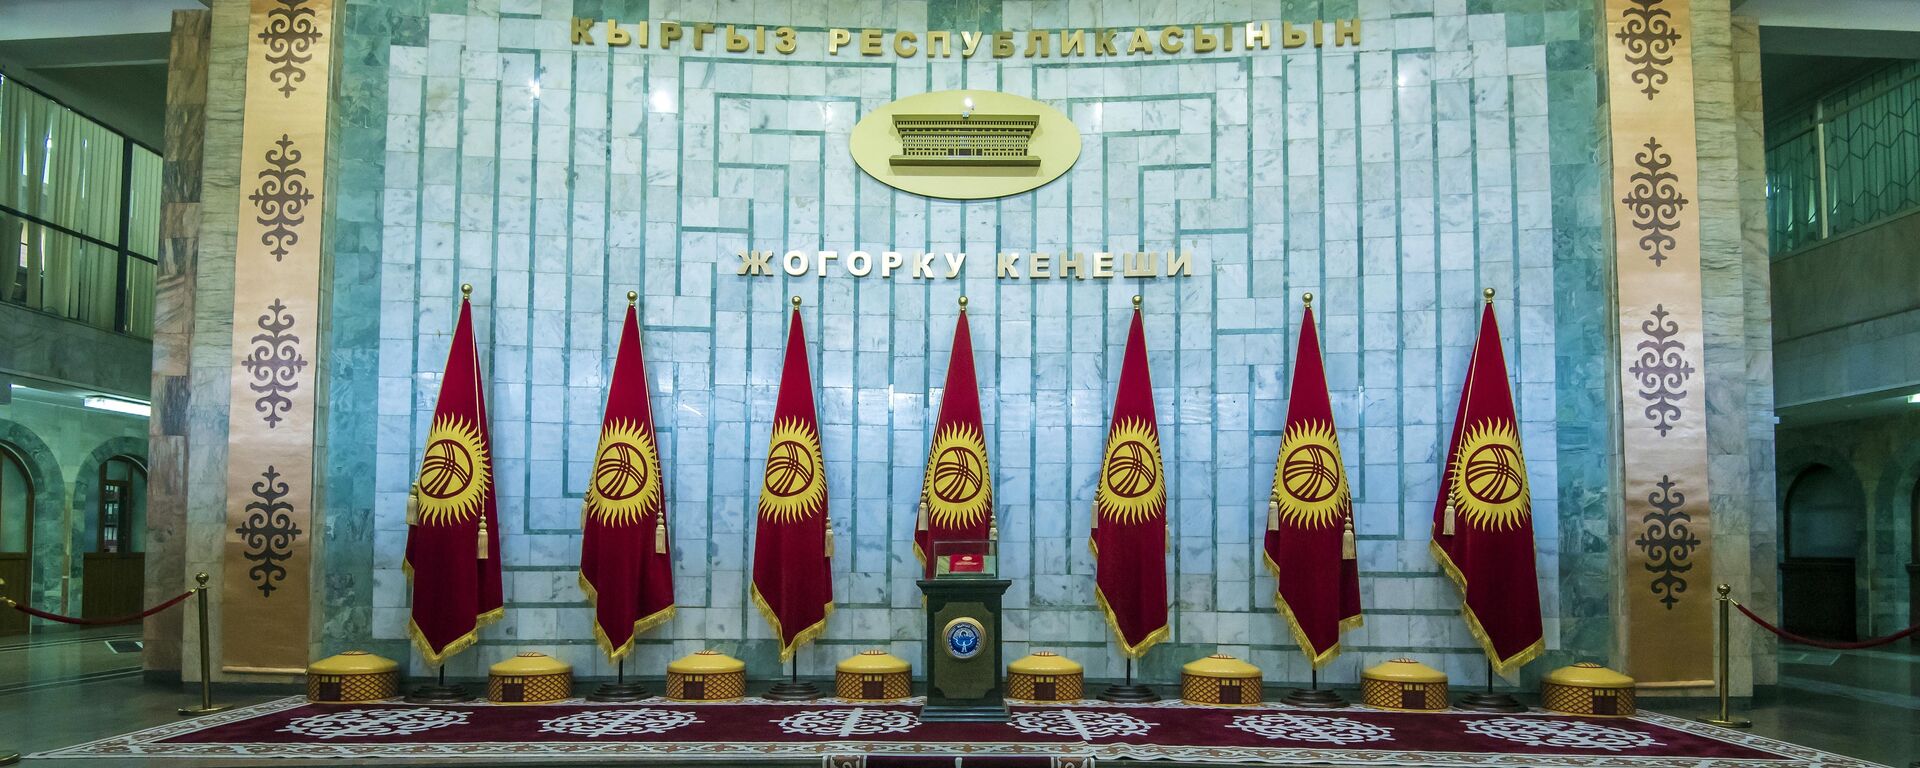 Работа Жогорку Кенеш в Бишкеке - Sputnik Кыргызстан, 1920, 15.12.2021